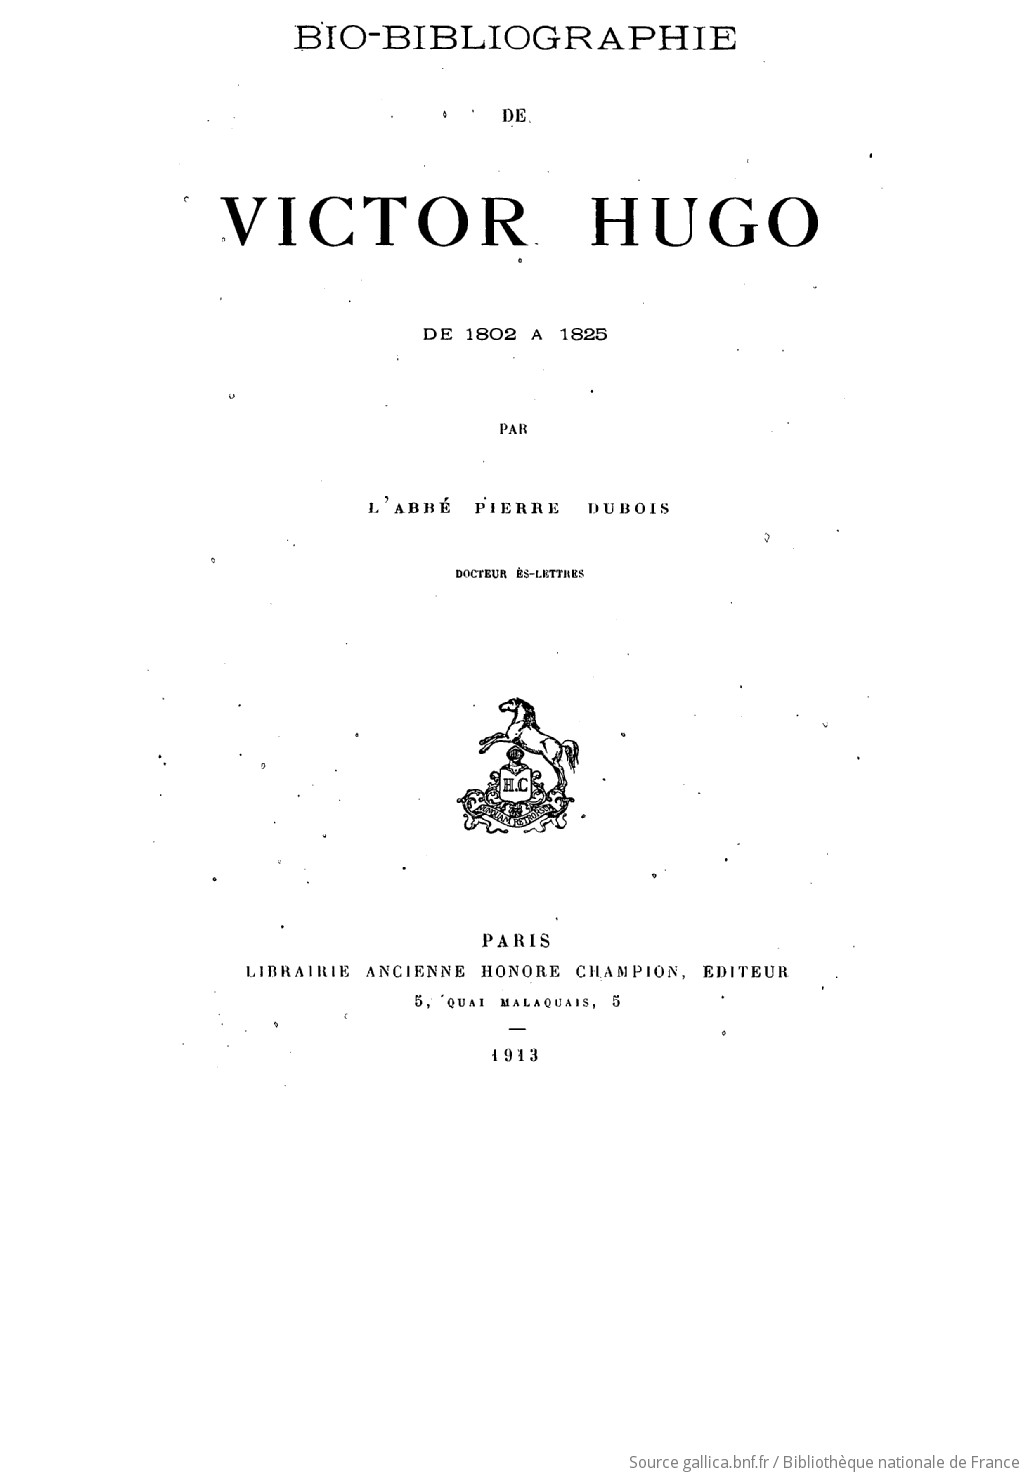 Bio-Bibliographie de Victor Hugo de 1802 a 1825 Pierre DuBois